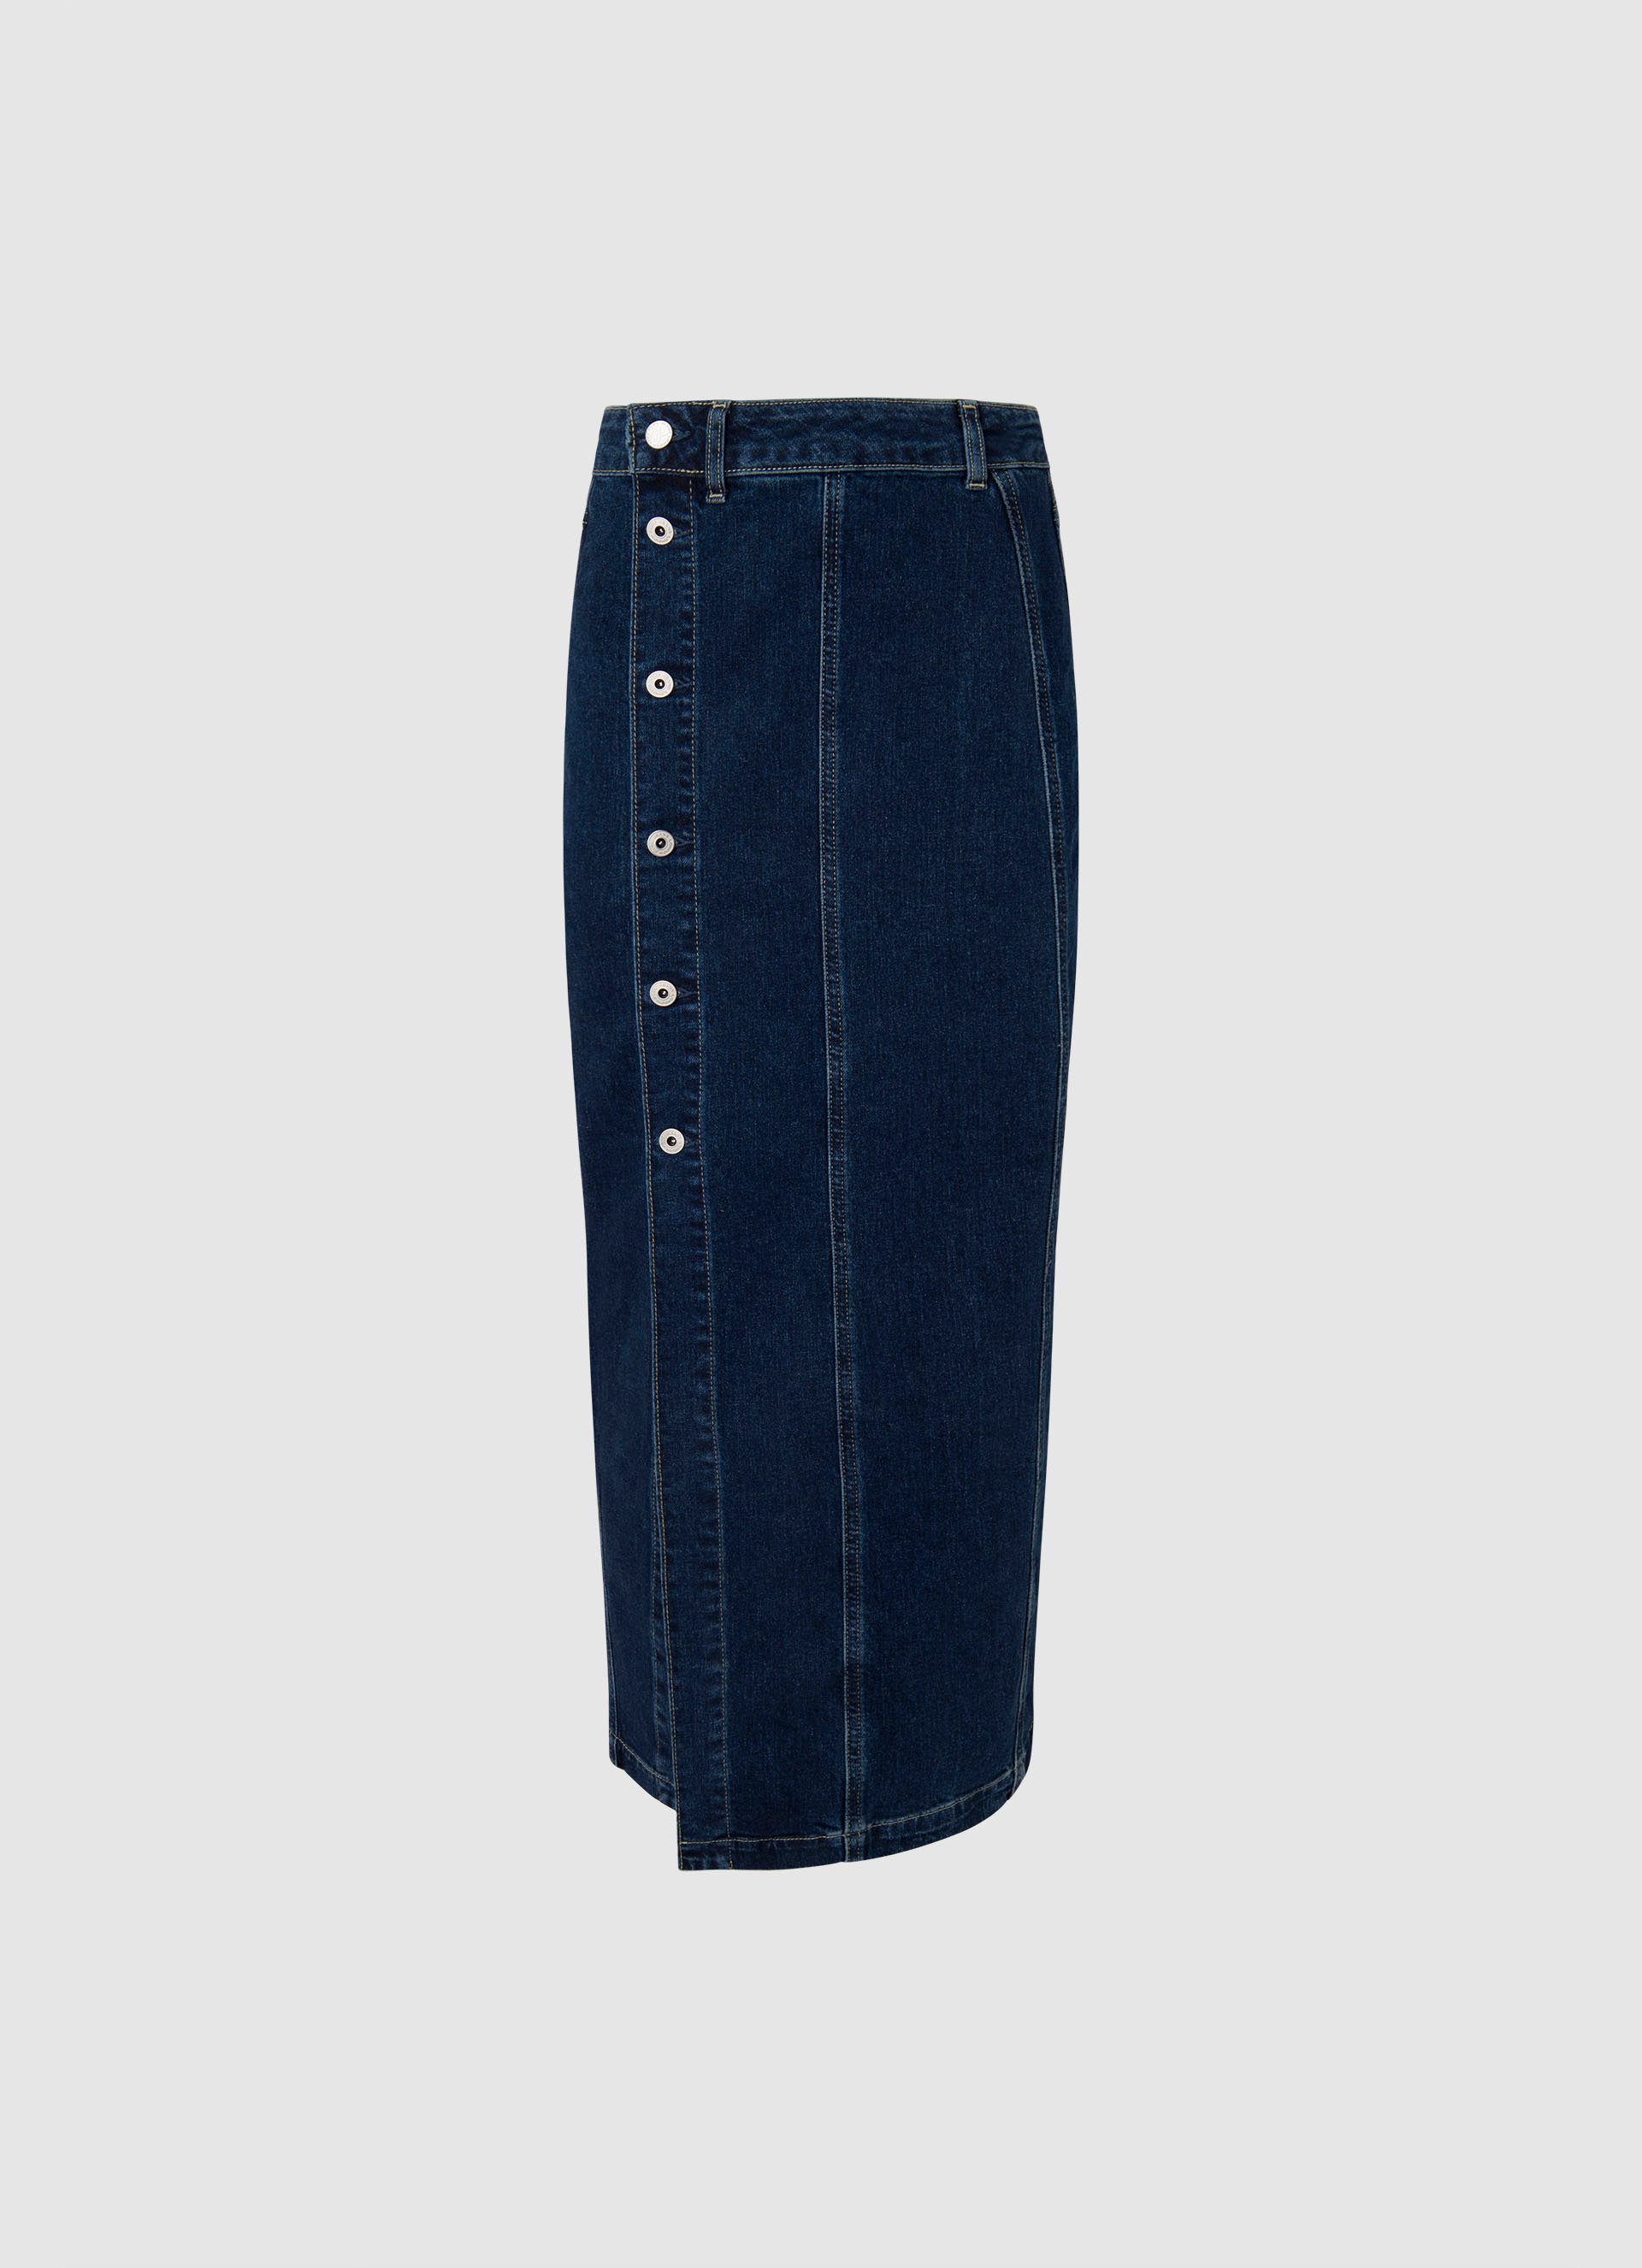 Pepe Jeans rok Midi Skirt